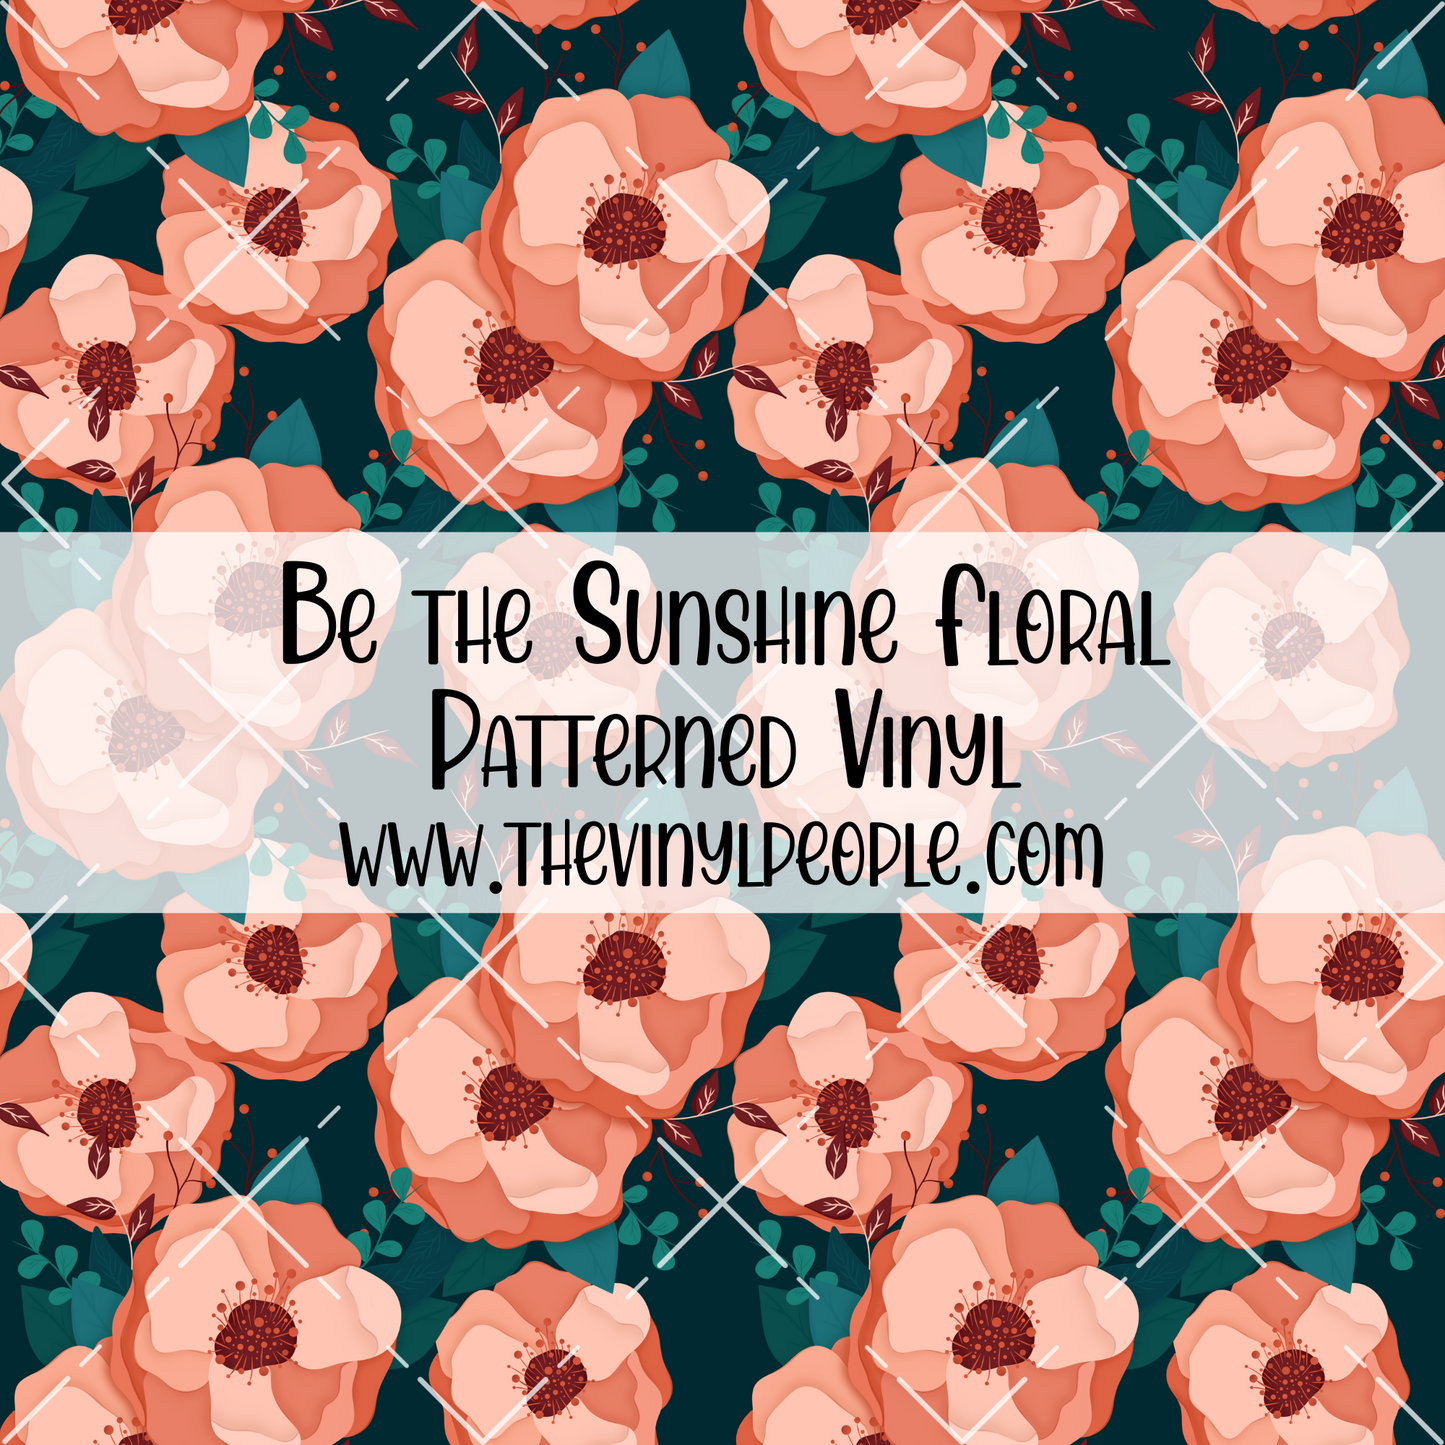 Be the Sunshine Floral Patterned Vinyl